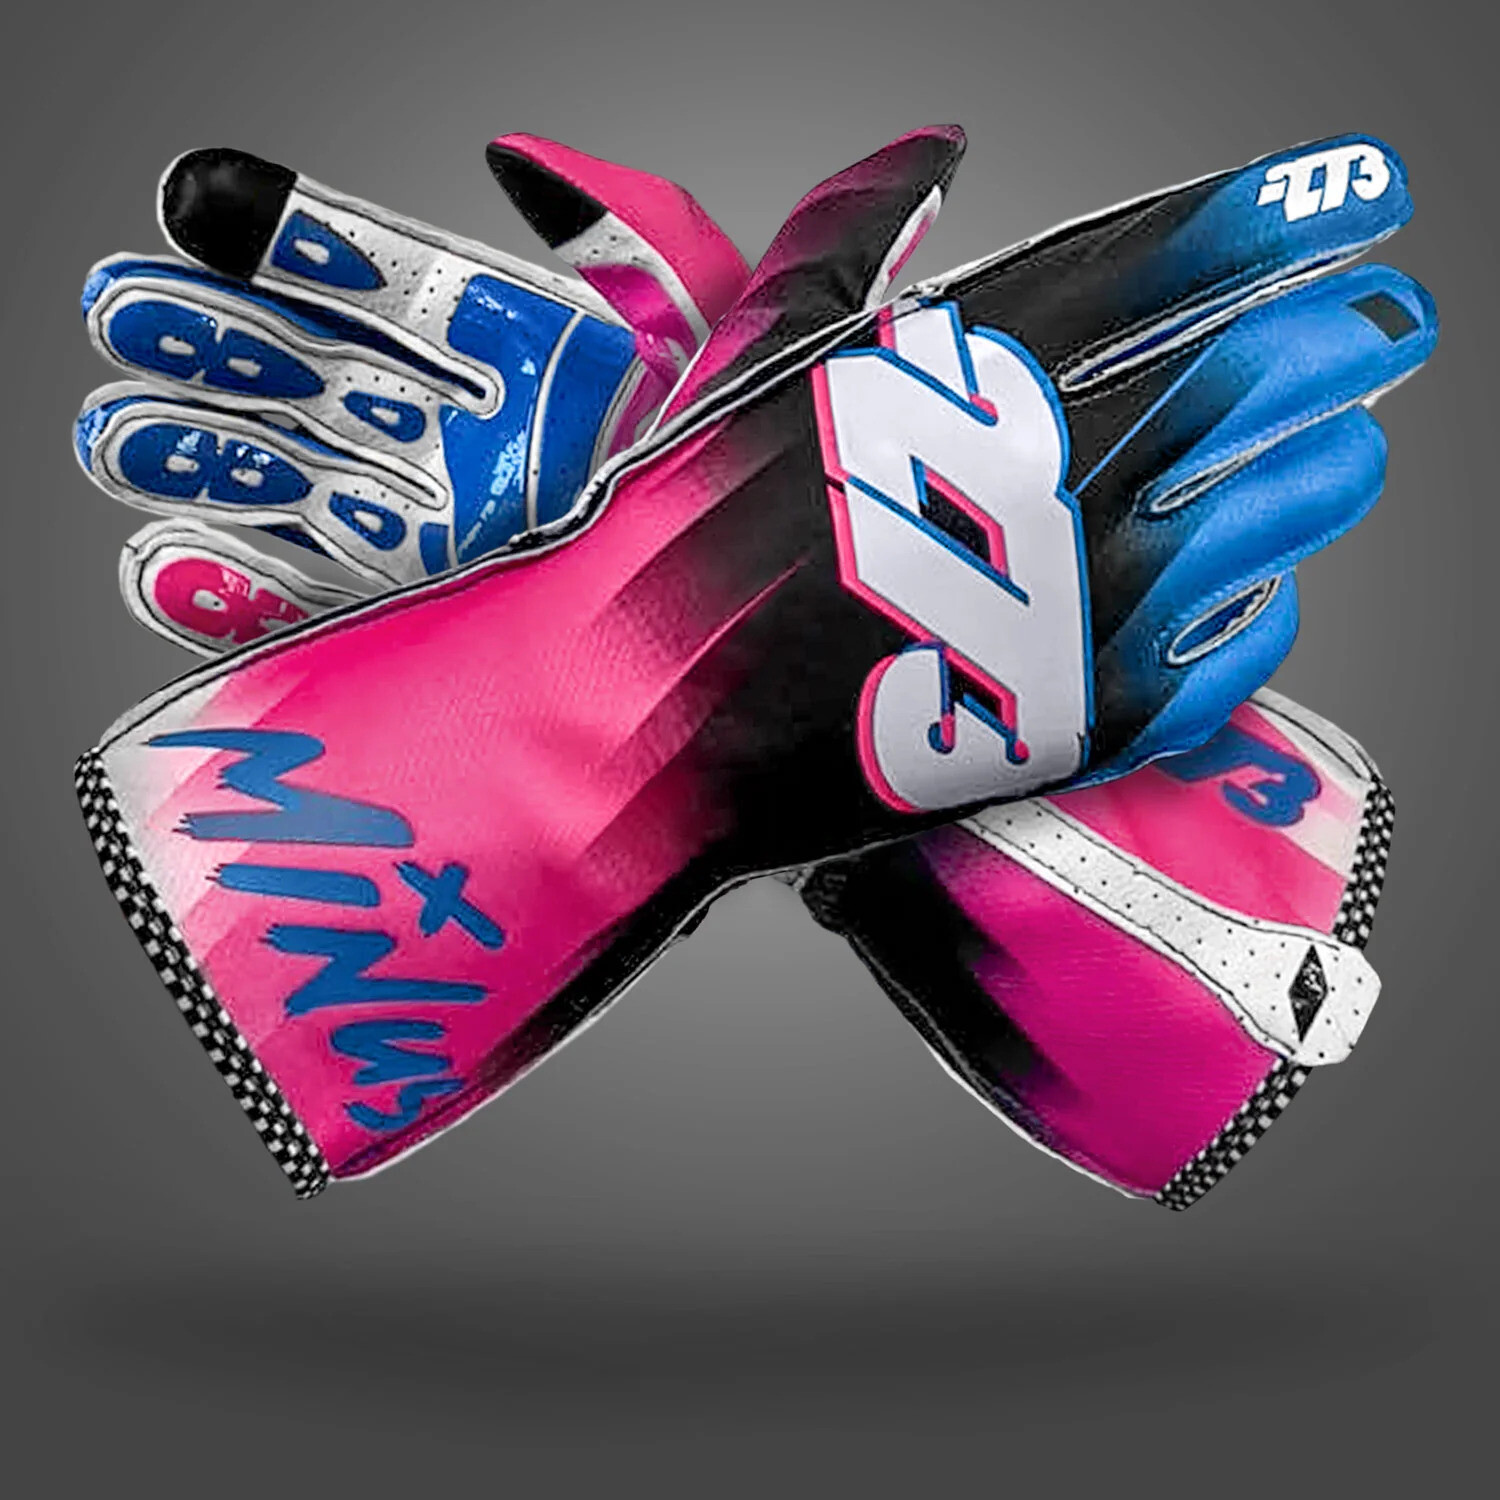 Minus 273 Supersonic Pink gloves